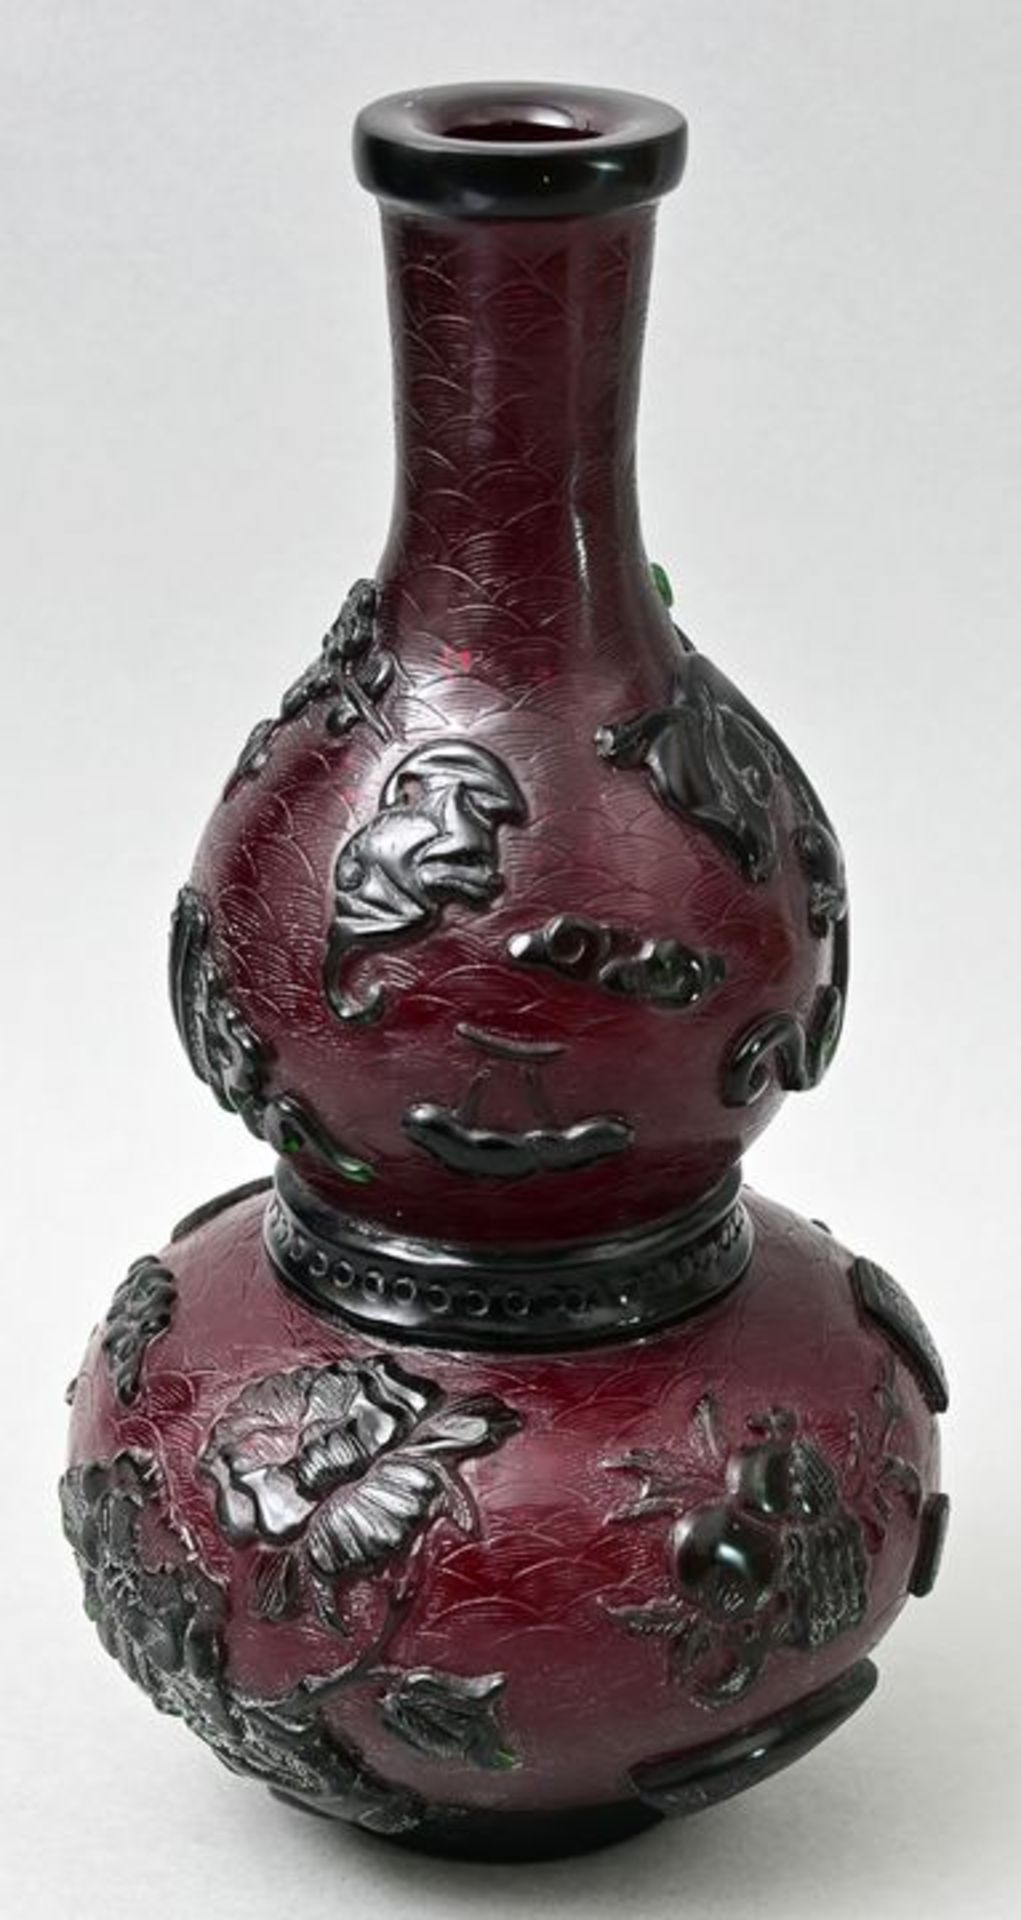 Flaschenvase Peking-Glas/ Peking glass bottle - Image 2 of 5